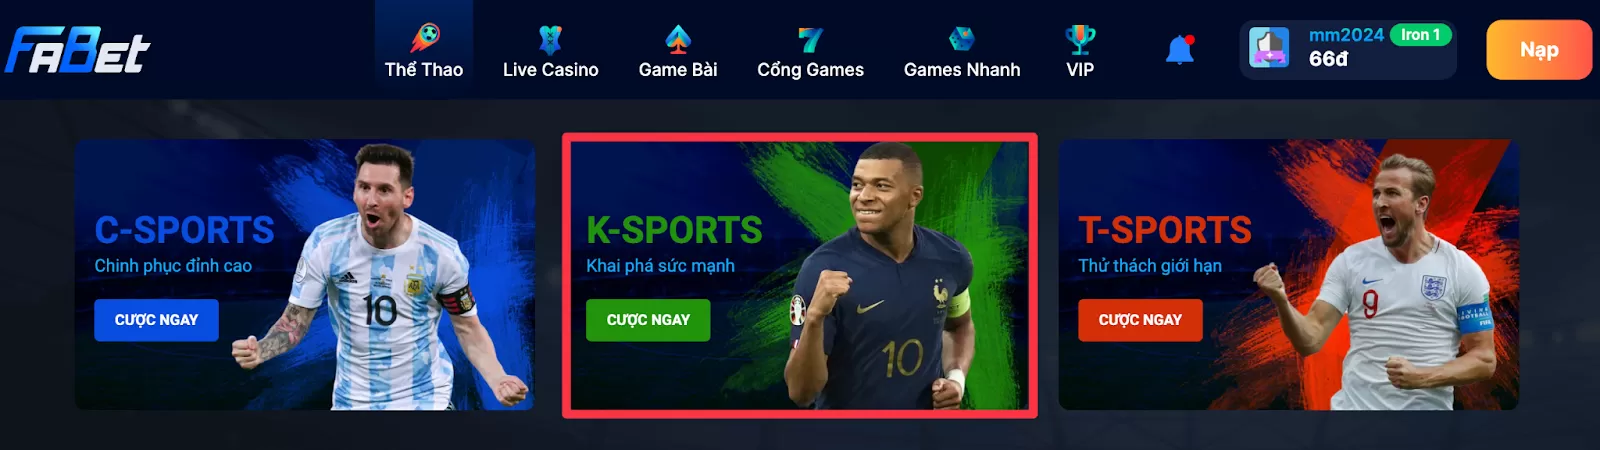 Truy cập trang web Fabet, Chọn sảnh K-Sport 